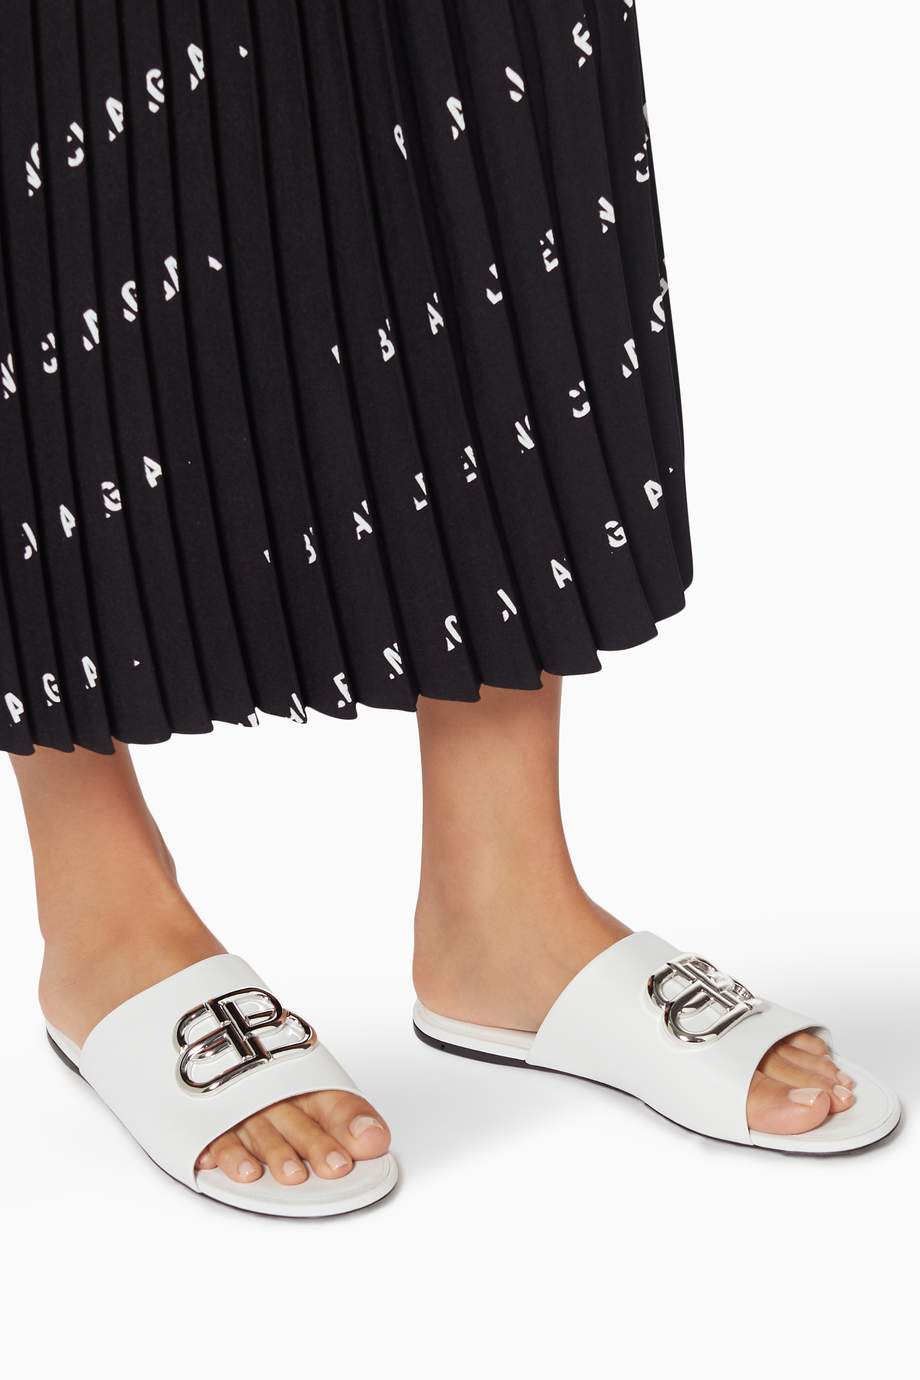 Shop Balenciaga White Oval BB Leather Mule Sandals for Women | Ounass UAE